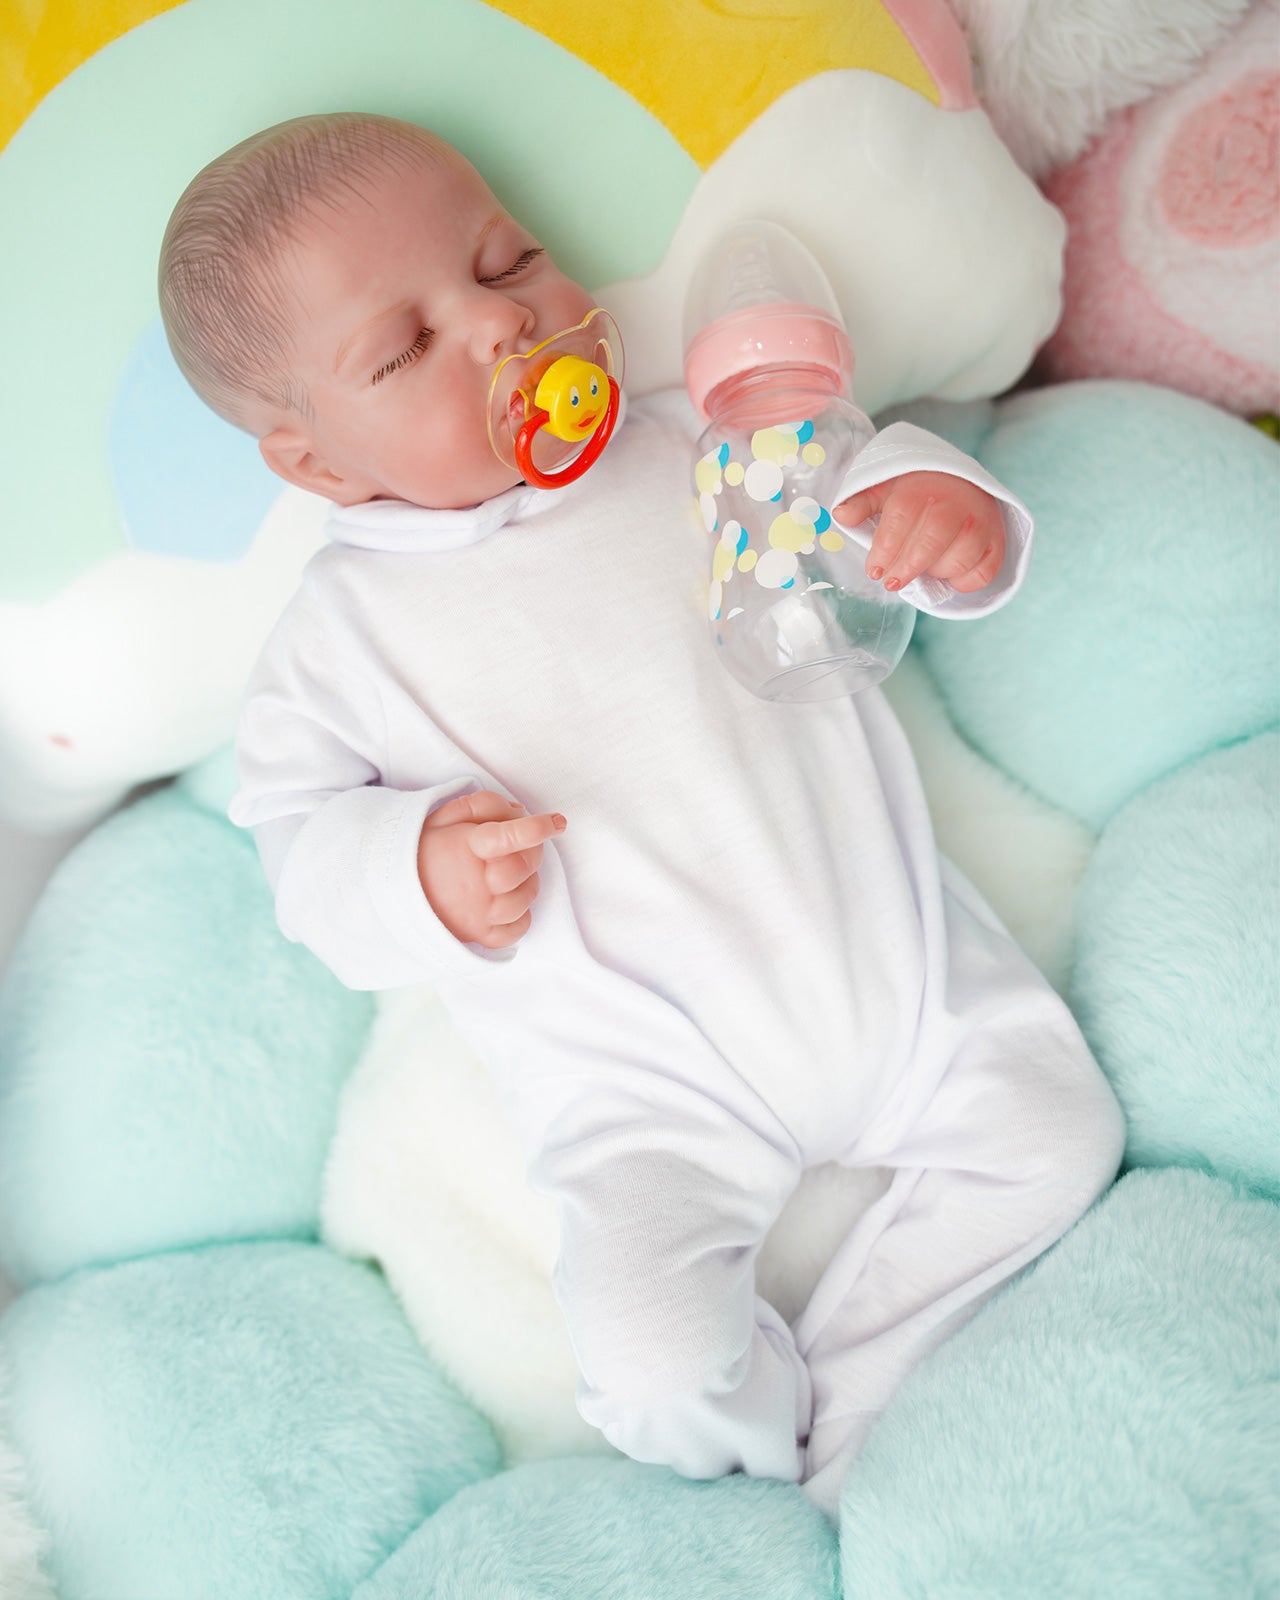 LouLou - 20" Reborn Baby Doll Realistic Sleeping Newborn Boy that Look Real